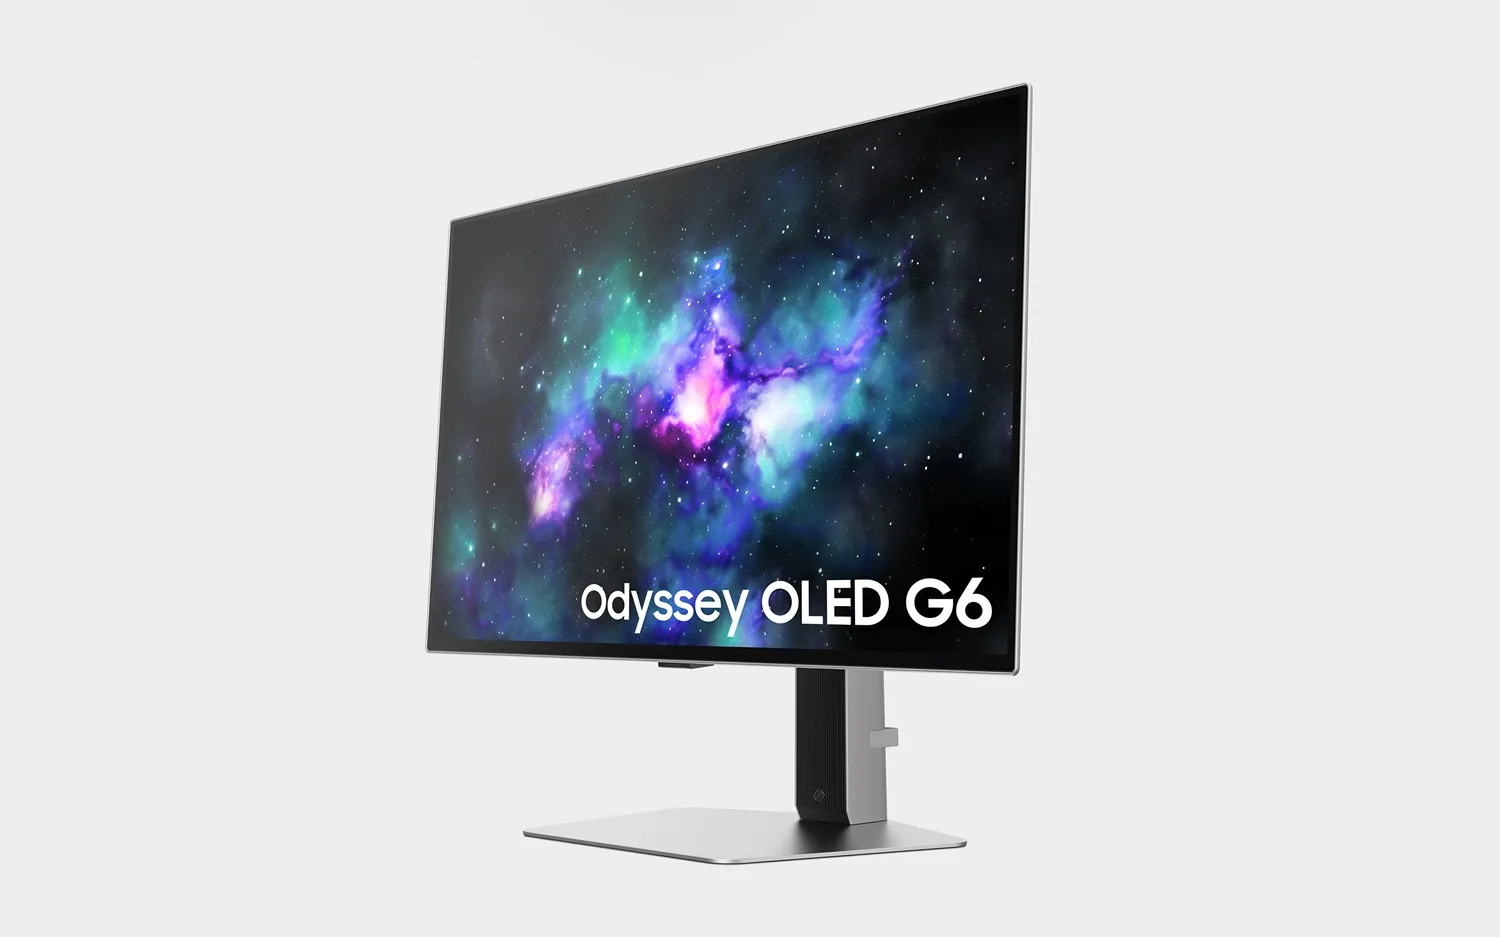 Samsung’s Odyssey OLED G6 gaming monitor.